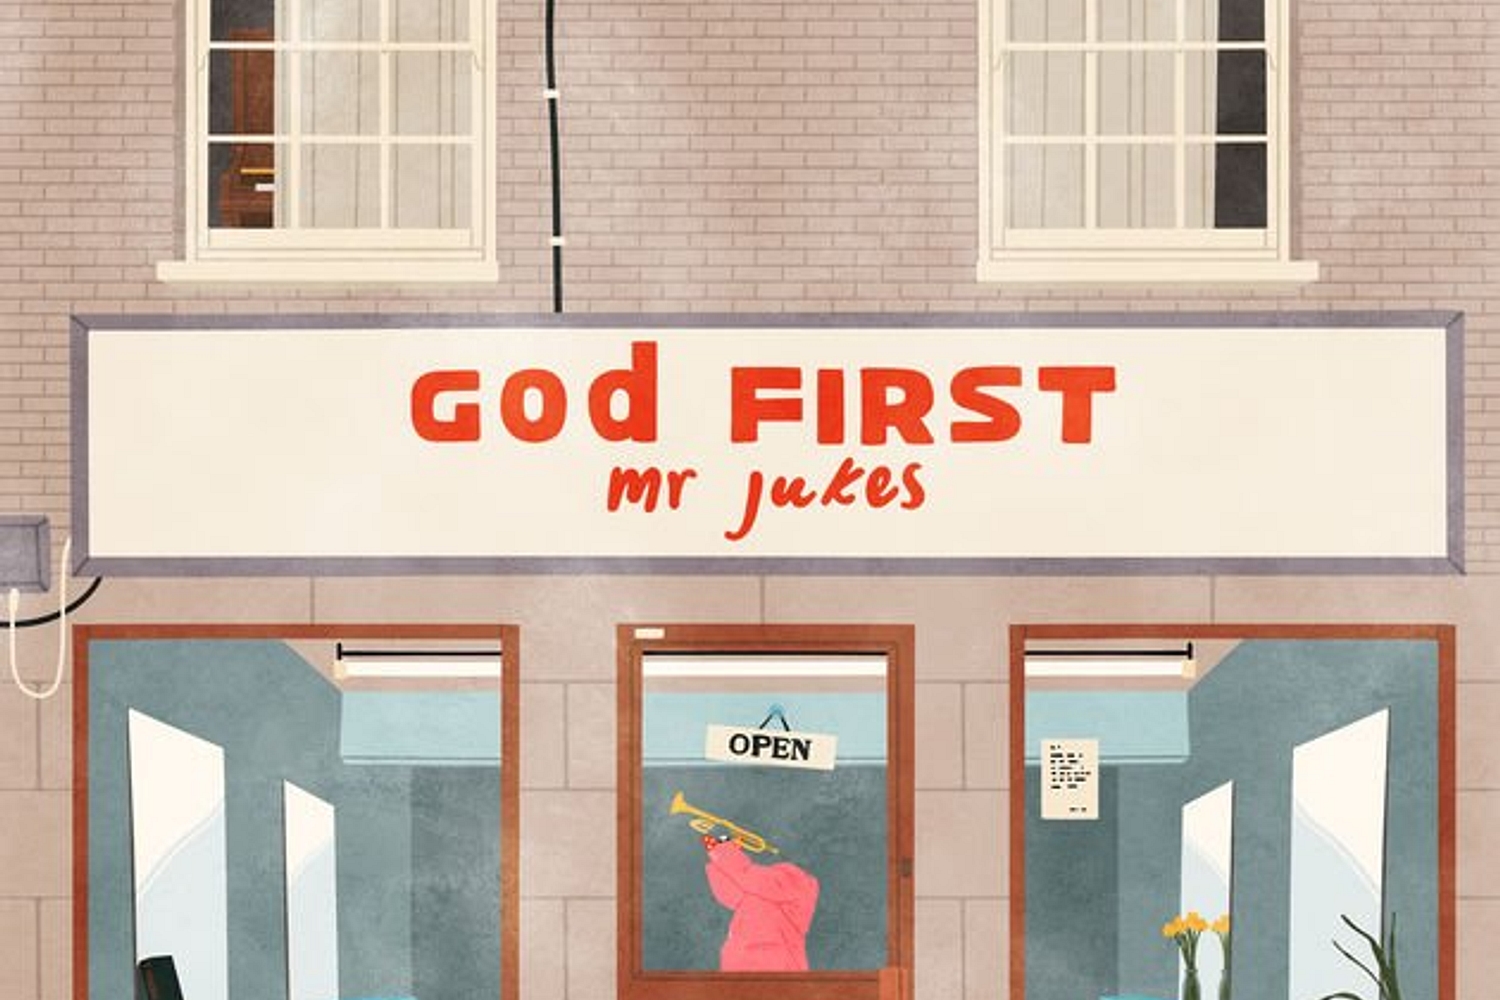 Mr Jukes - God First